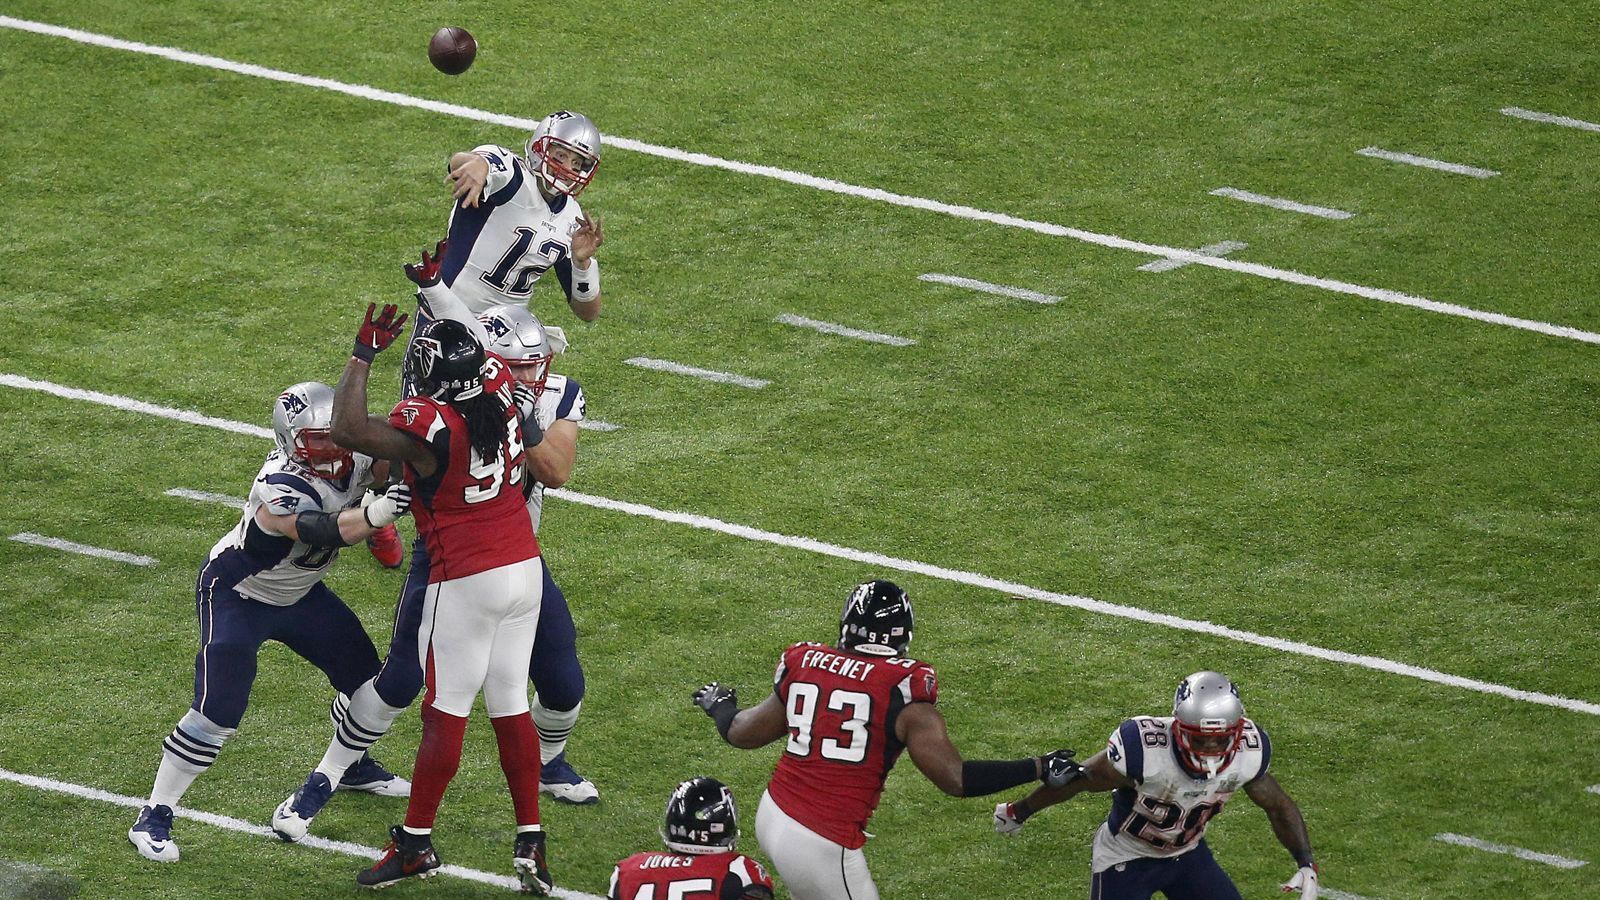 
                <strong>Super Bowl 2017: New England Patriots (34:28 in der Overtime gegen die Atlanta Falcons)</strong><br>
                Saison danach: 13-3, Niederlage im Super Bowl 
              